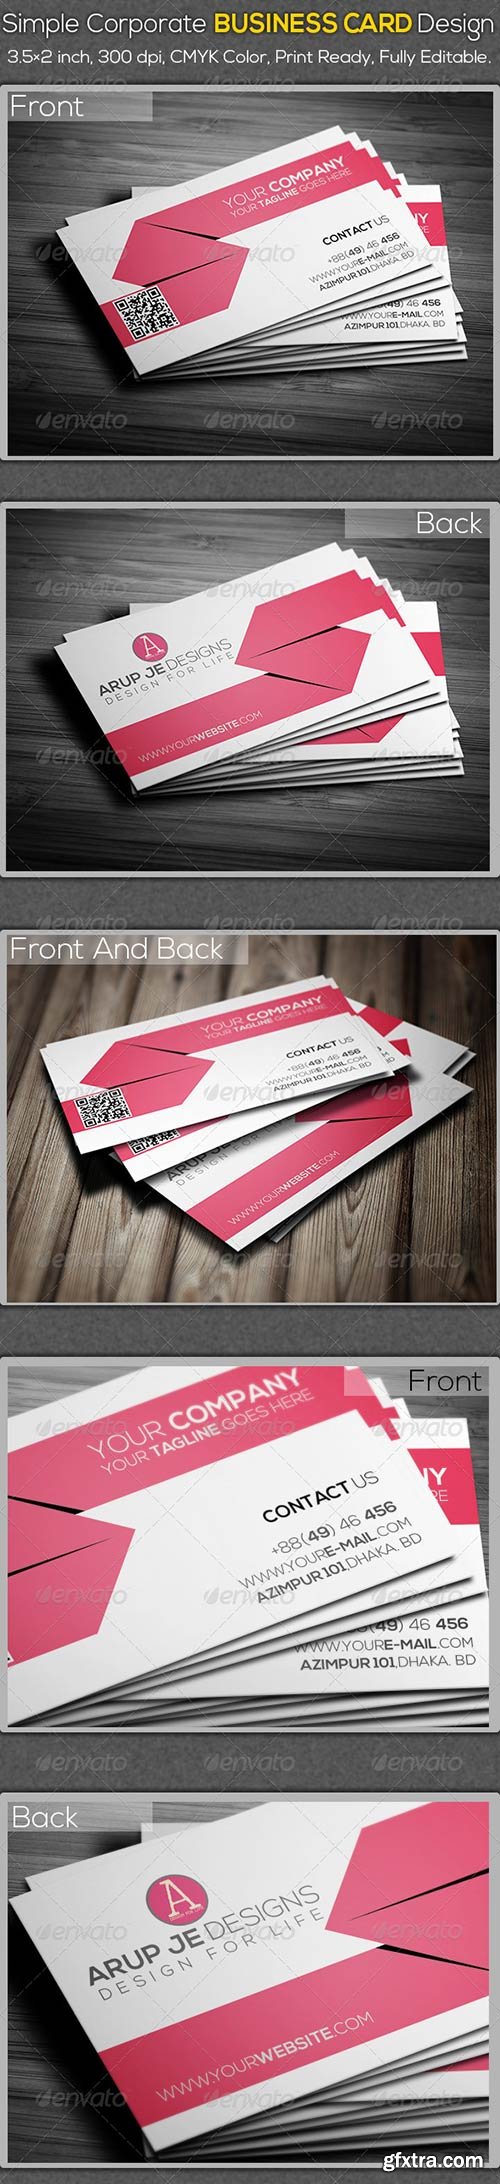 GraphicRiver - Simple Corporate Business Card Design 6925191